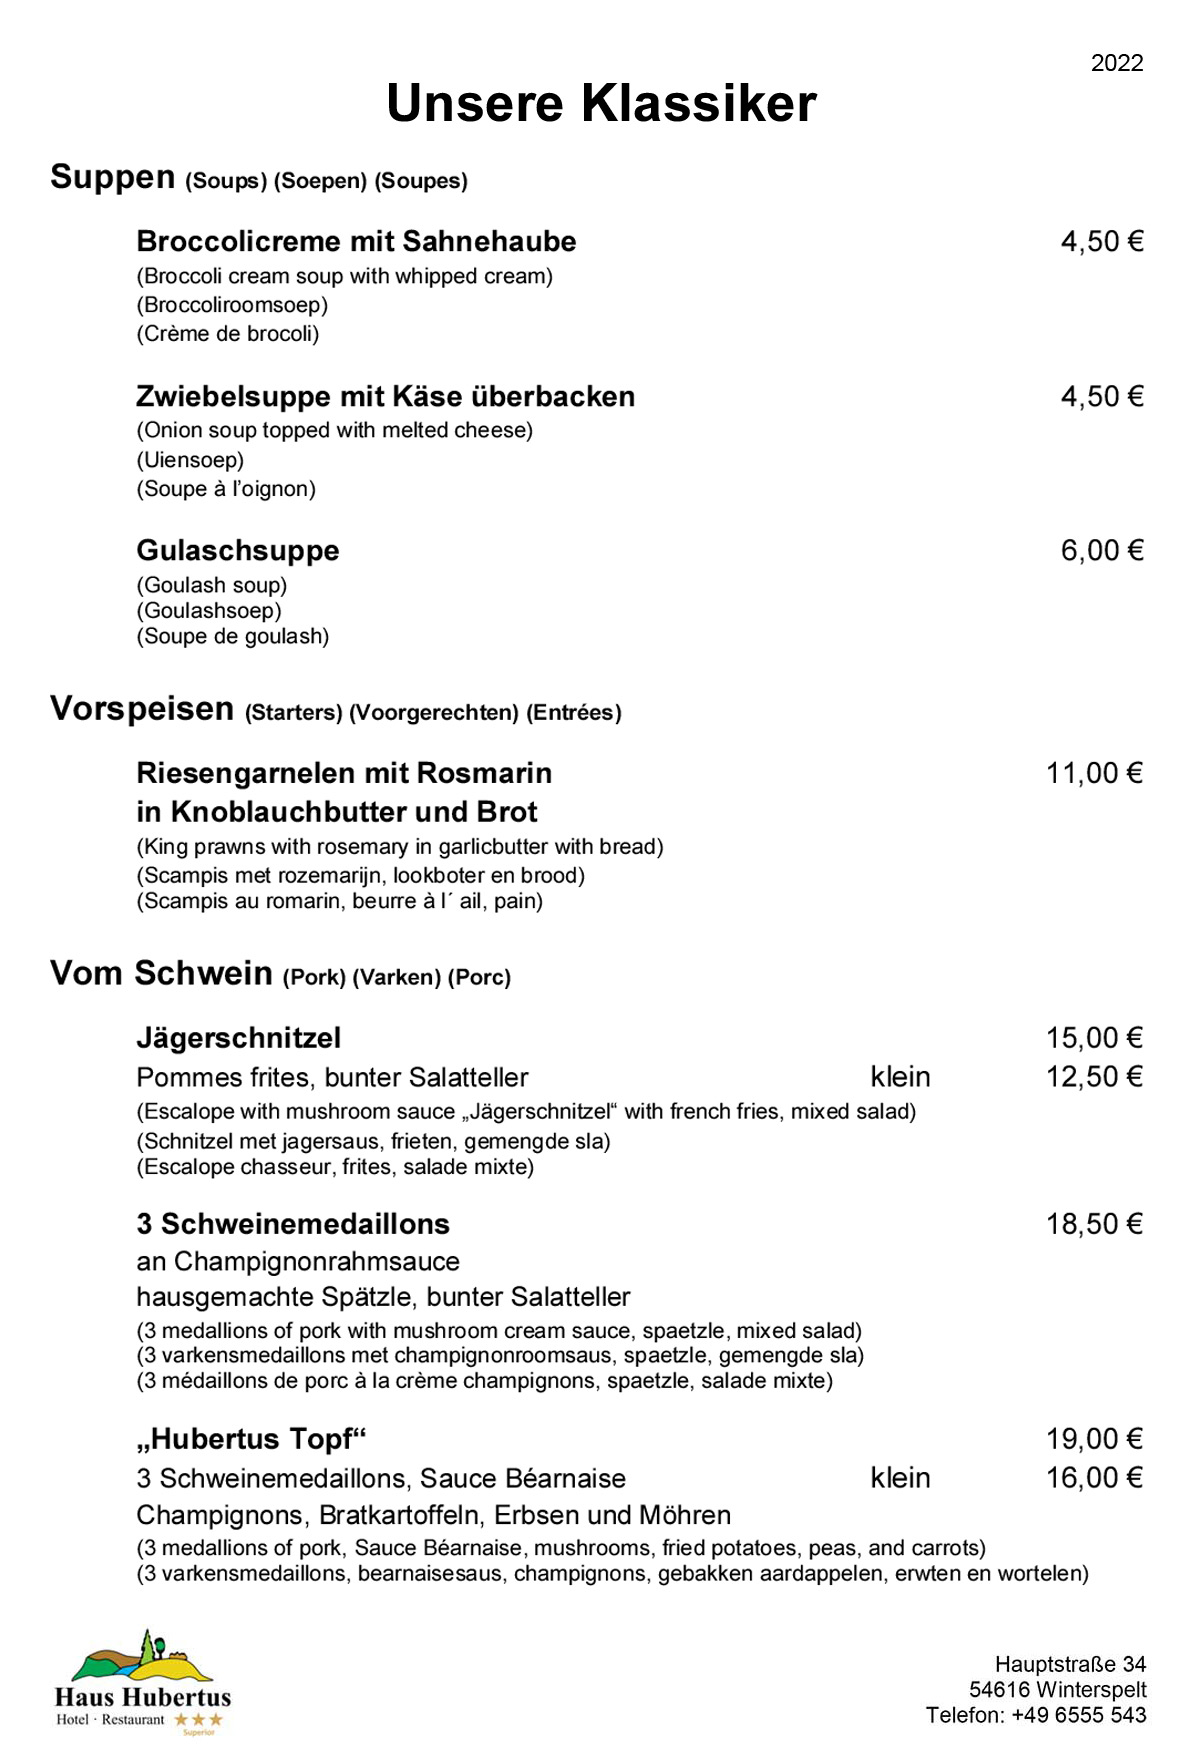 Hotel - Restaurant Haus Hubertus - menu 07/2022 - our classics - page 1